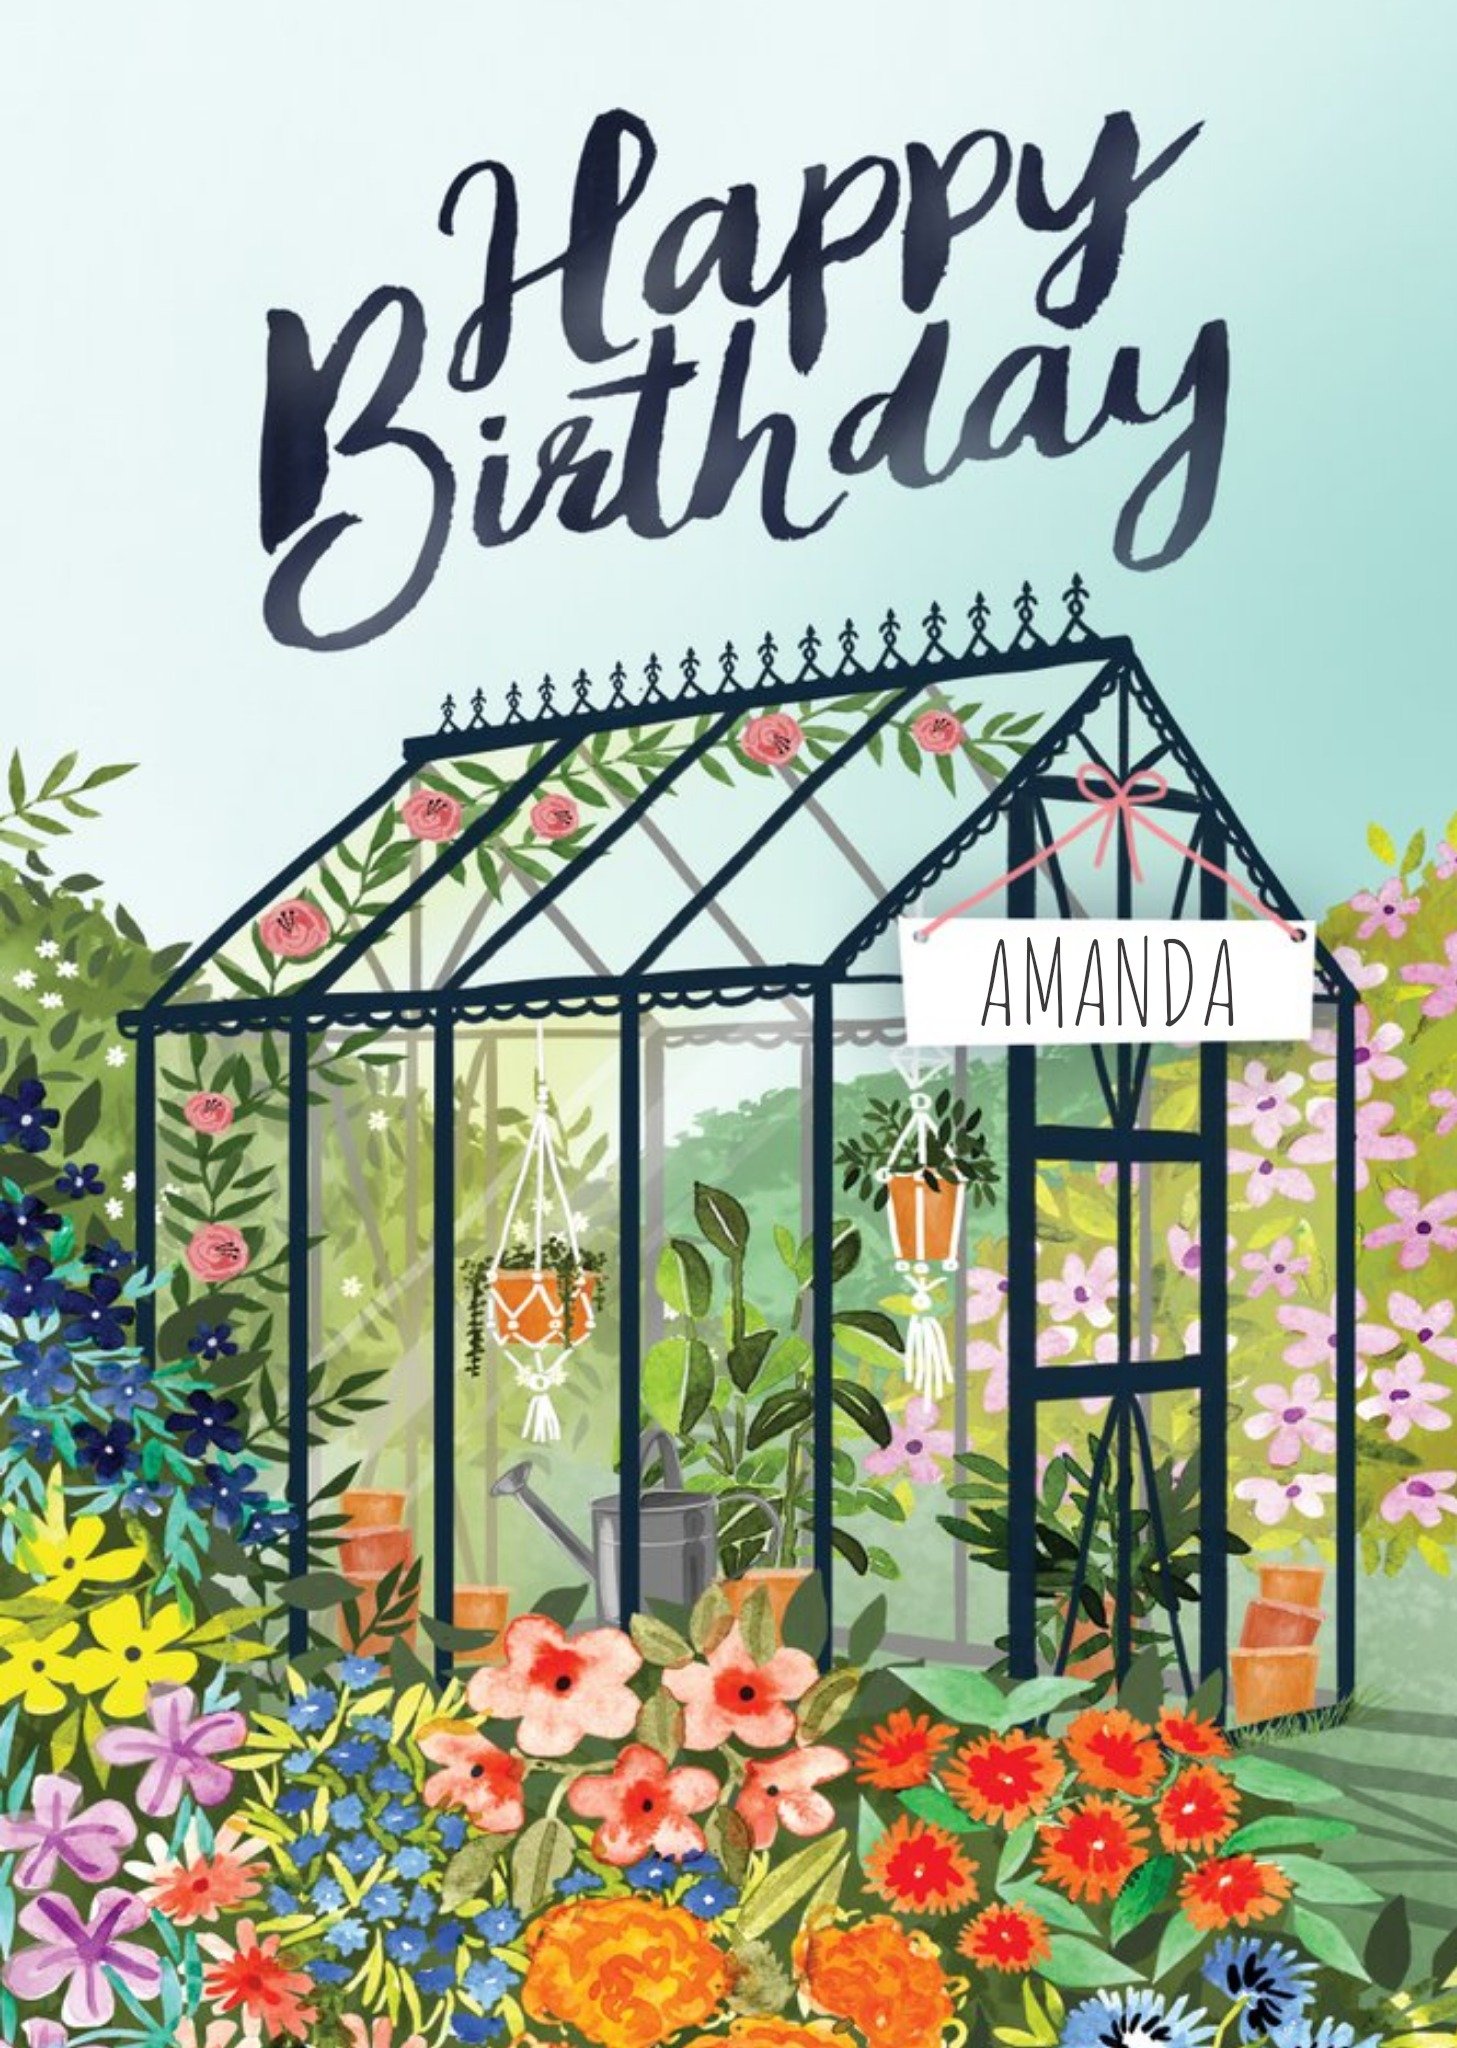 Moonpig Beautiful Botanical Hand-Painted Greenhouse Illustration Happy Birthday Card Ecard